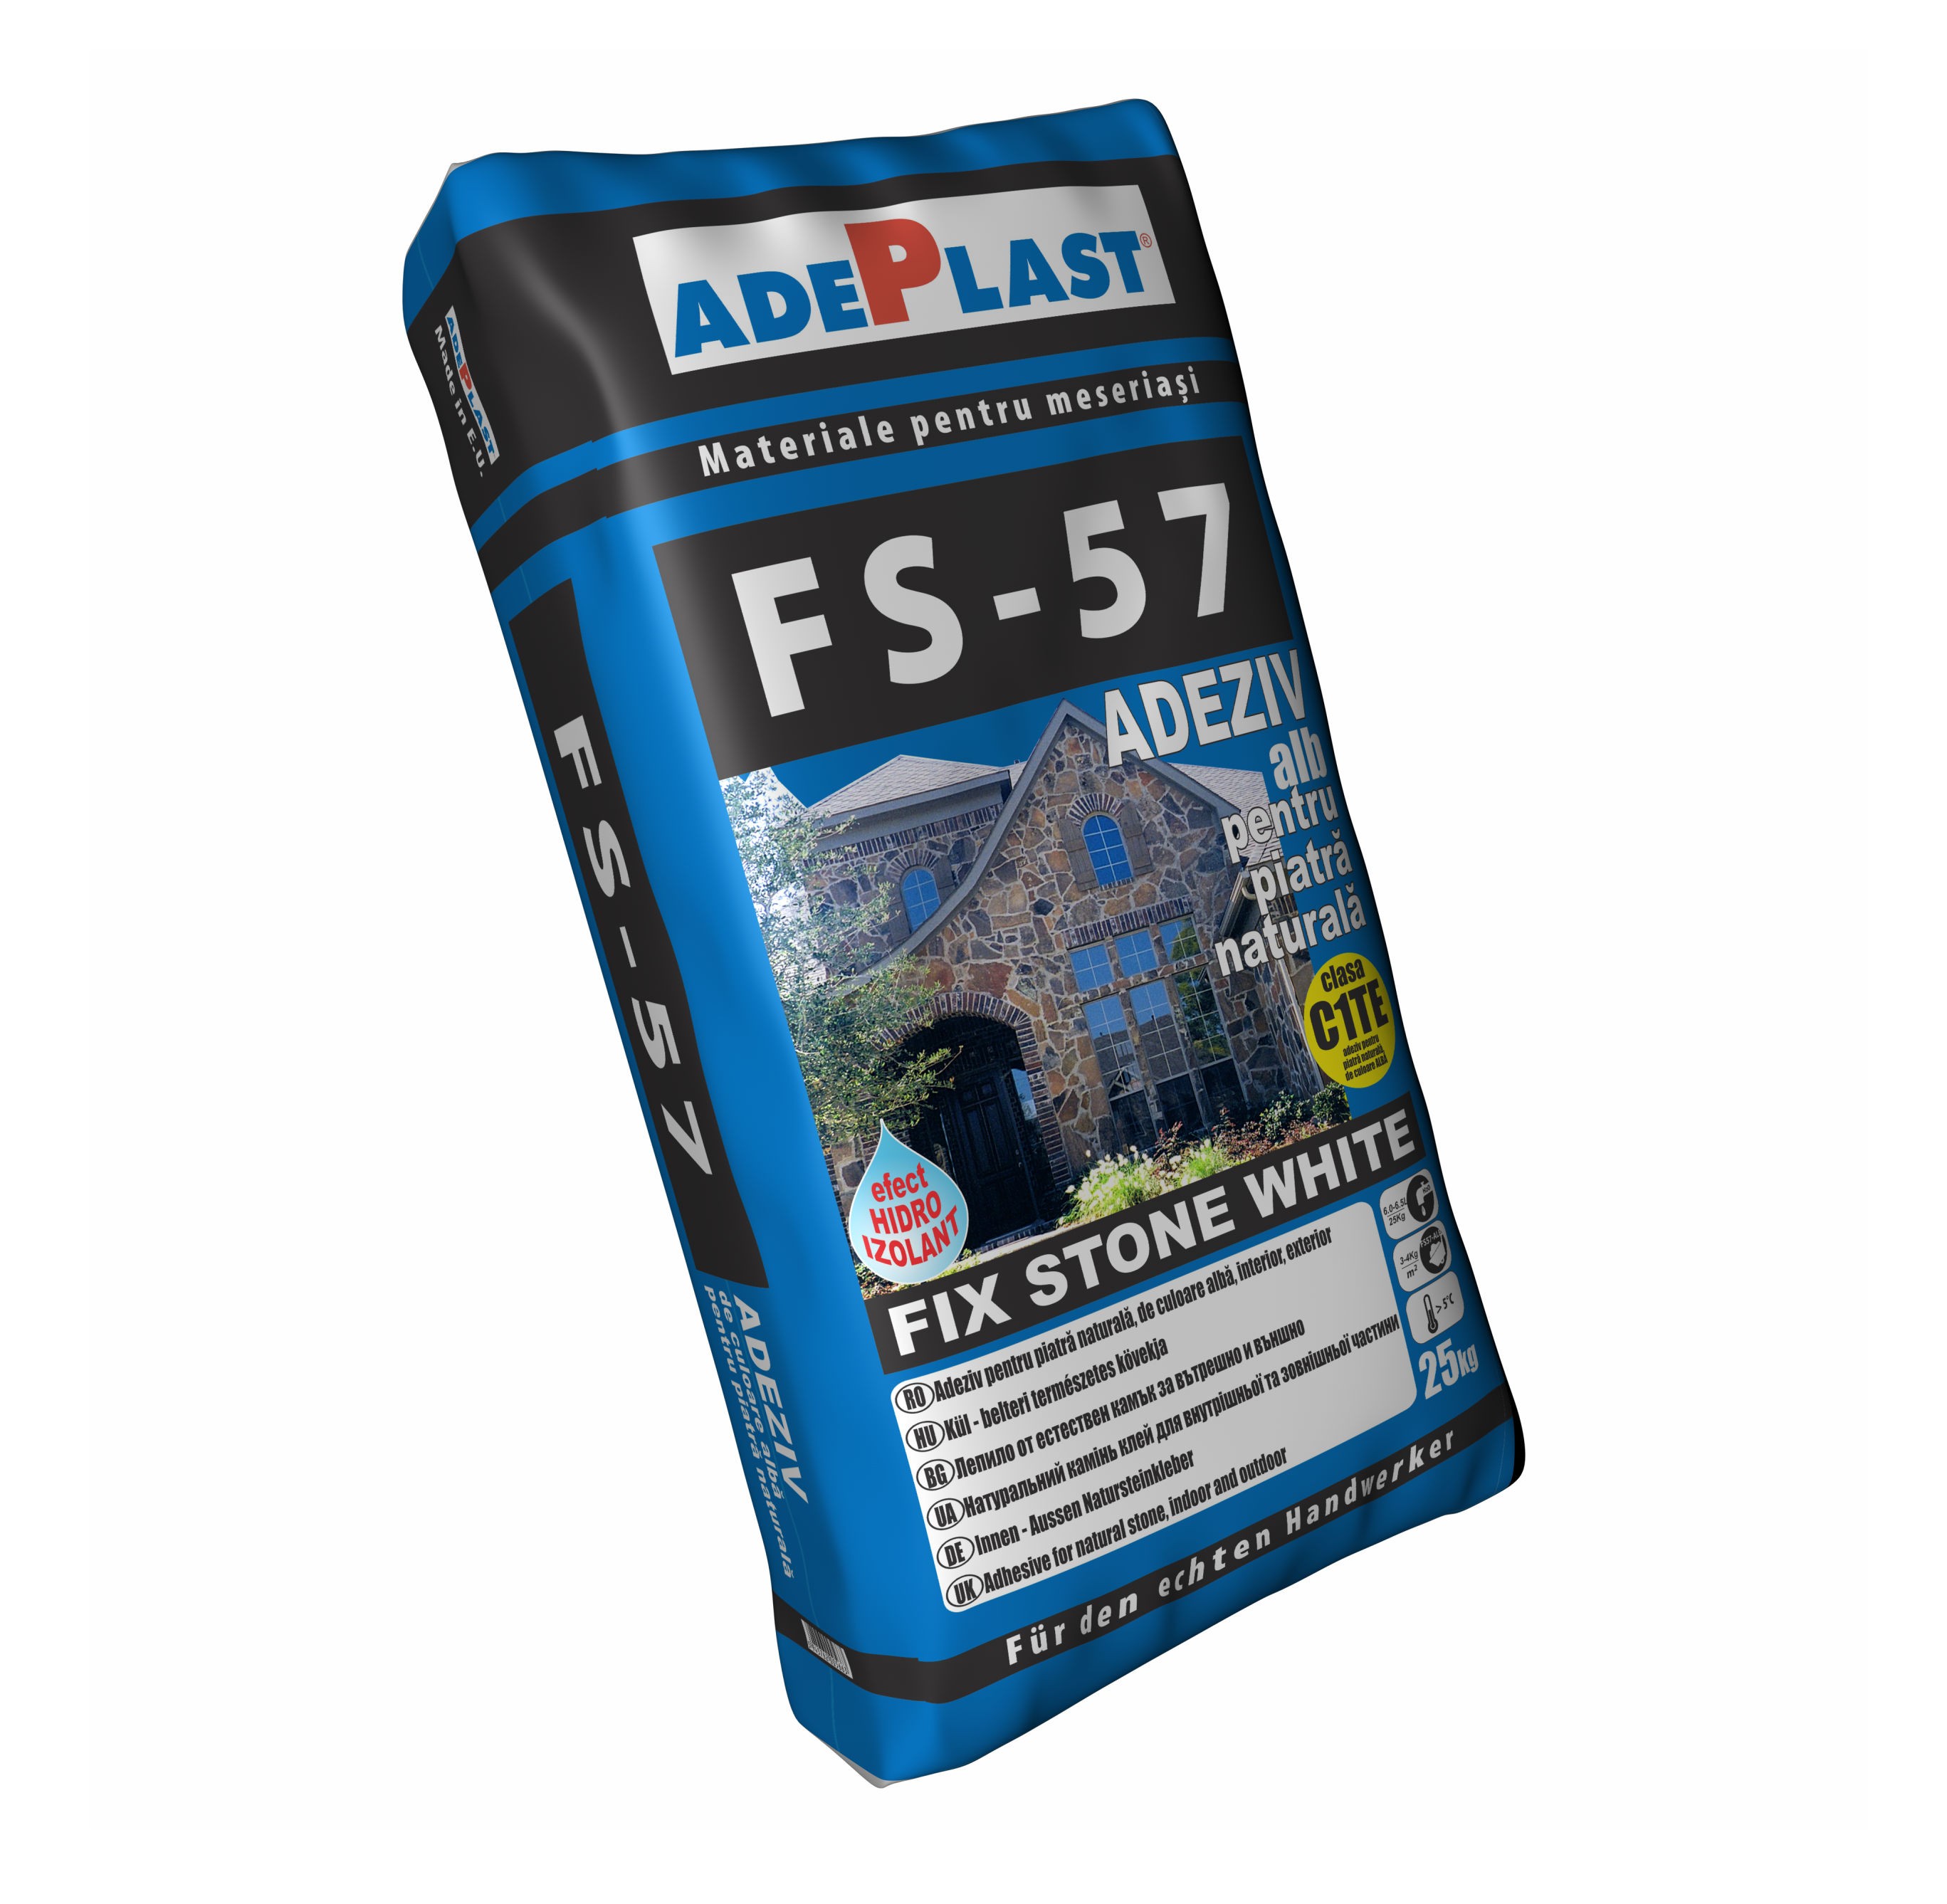 Adhesives ceramic tiles - Adhesive for natural stone FS-57 Adeplast 25kg, https:maxbau.ro